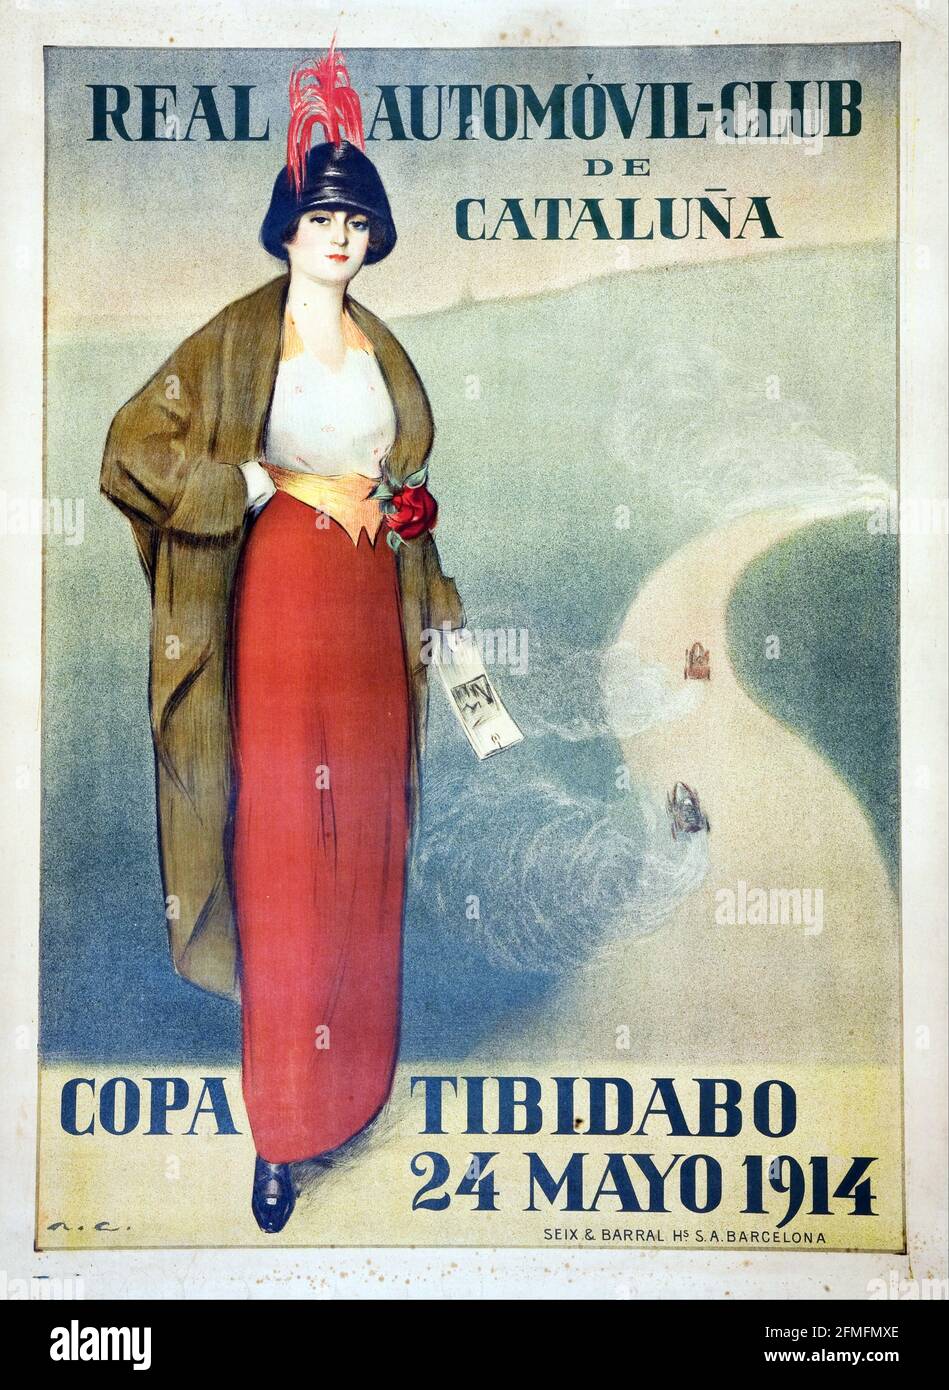 Ramon Casas - Real Automovil-Club de Cataluna. Copa Tibidabo. 24 Mayo 1914. Stockfoto